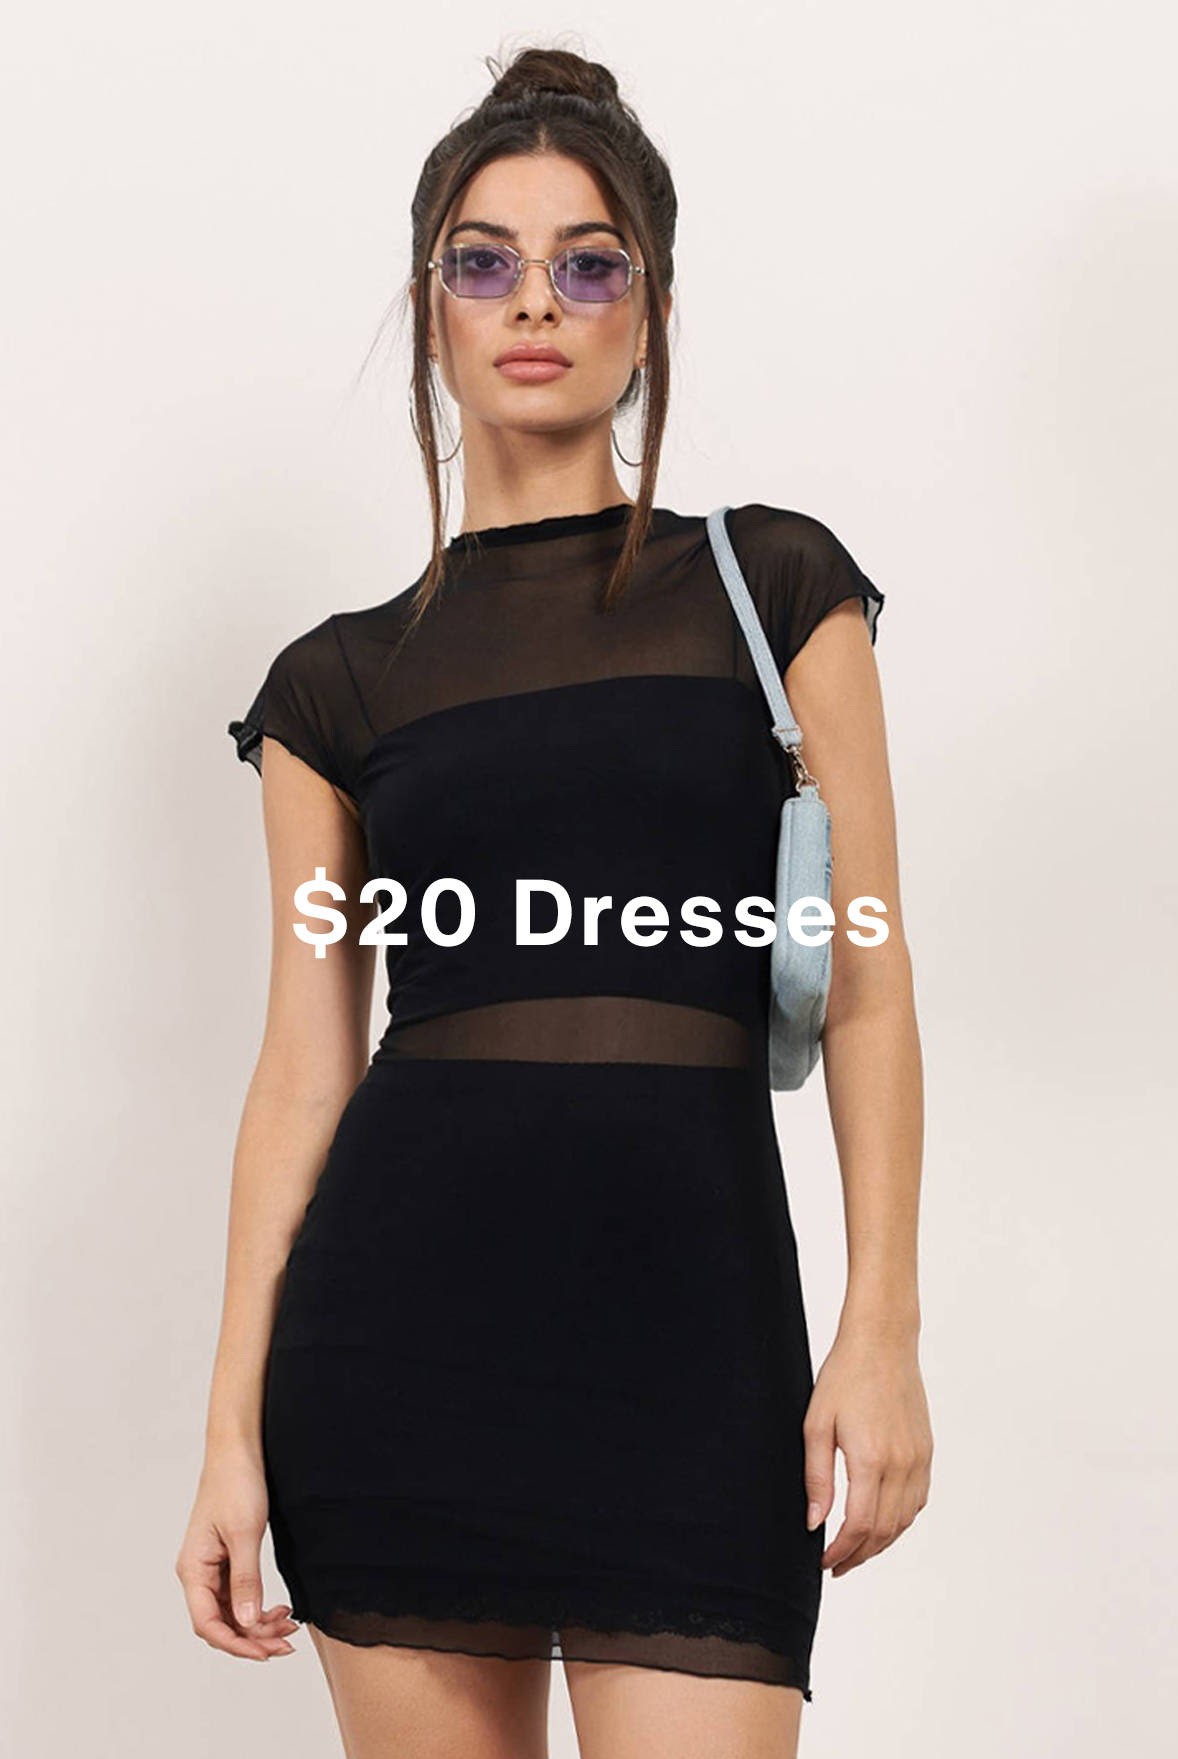 Tobi - MAJOR SALE: $20 DRESSES